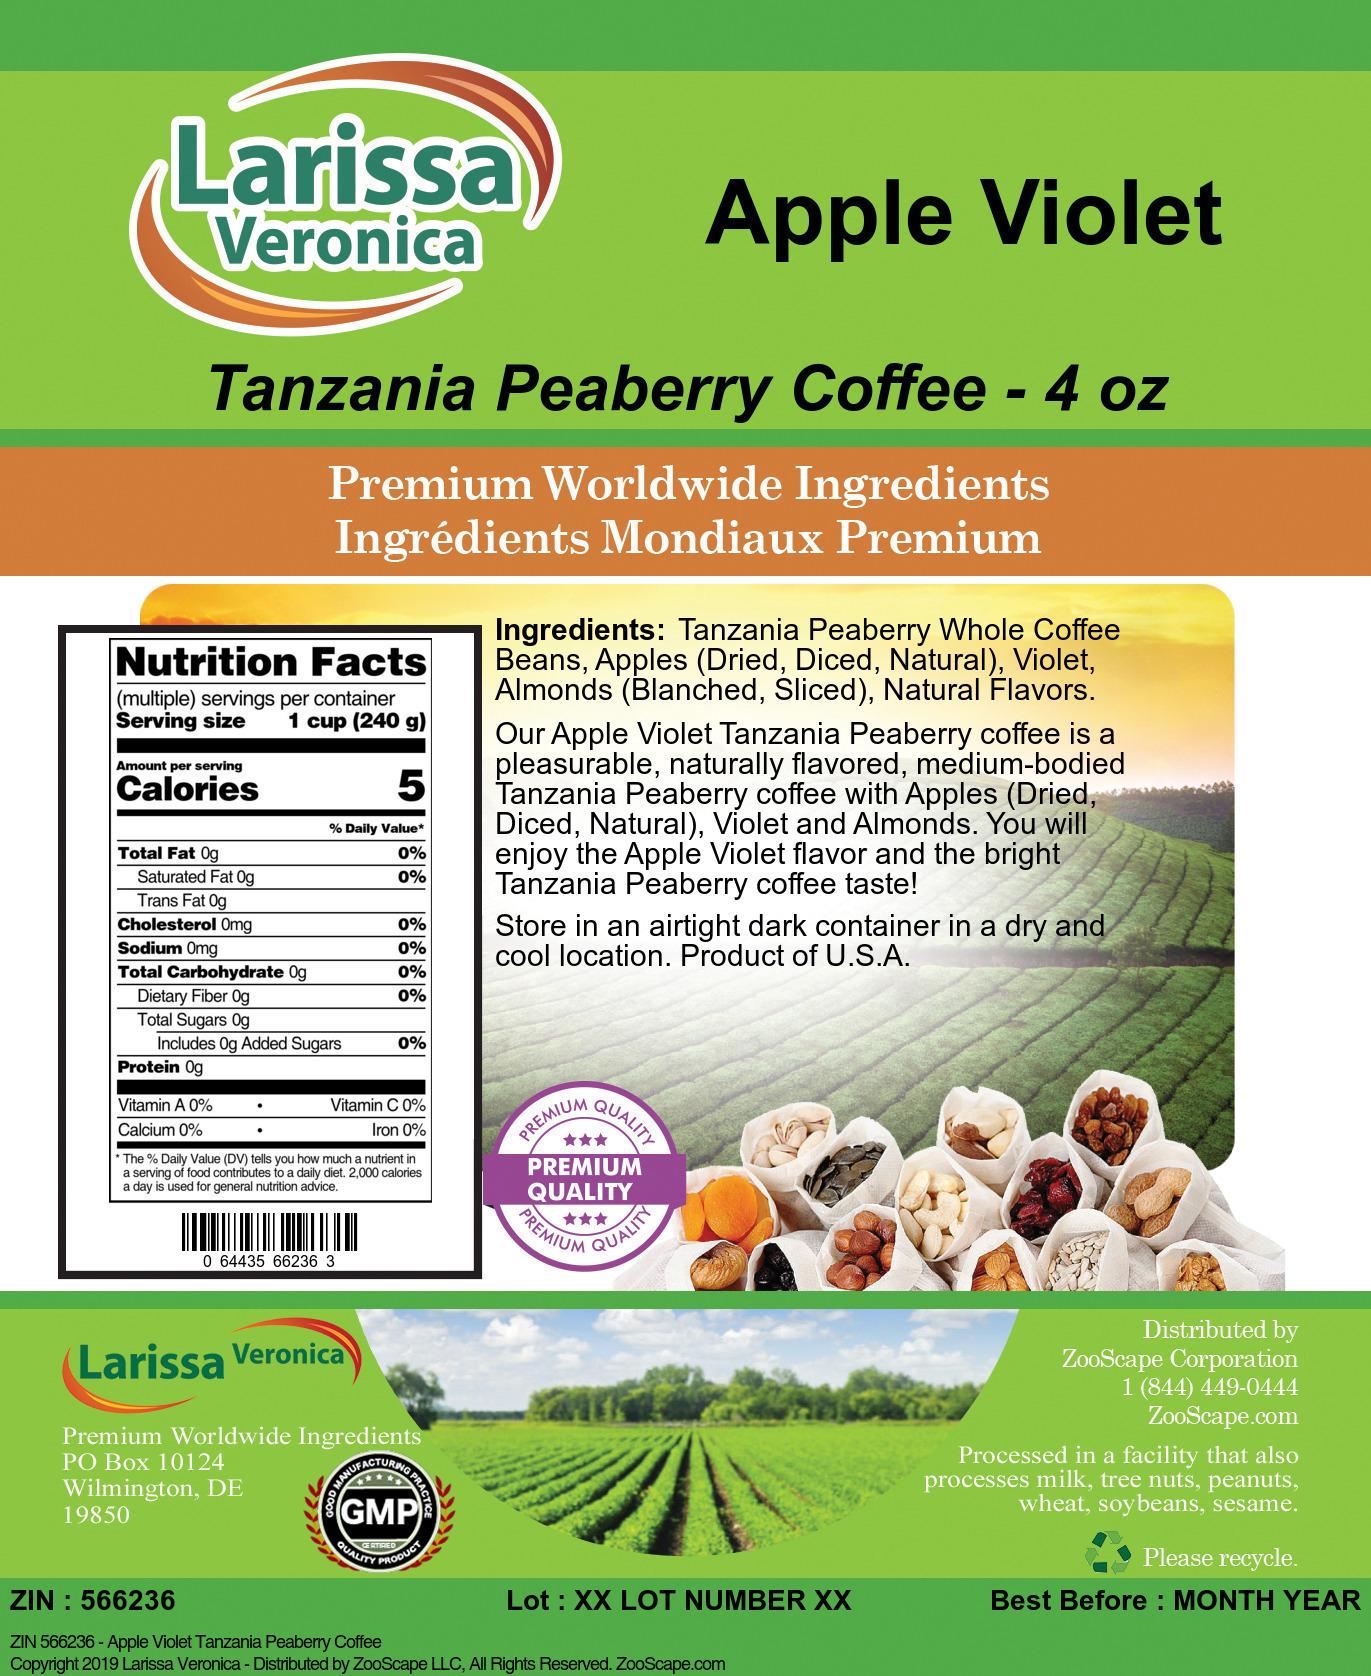 Apple Violet Tanzania Peaberry Coffee - Label